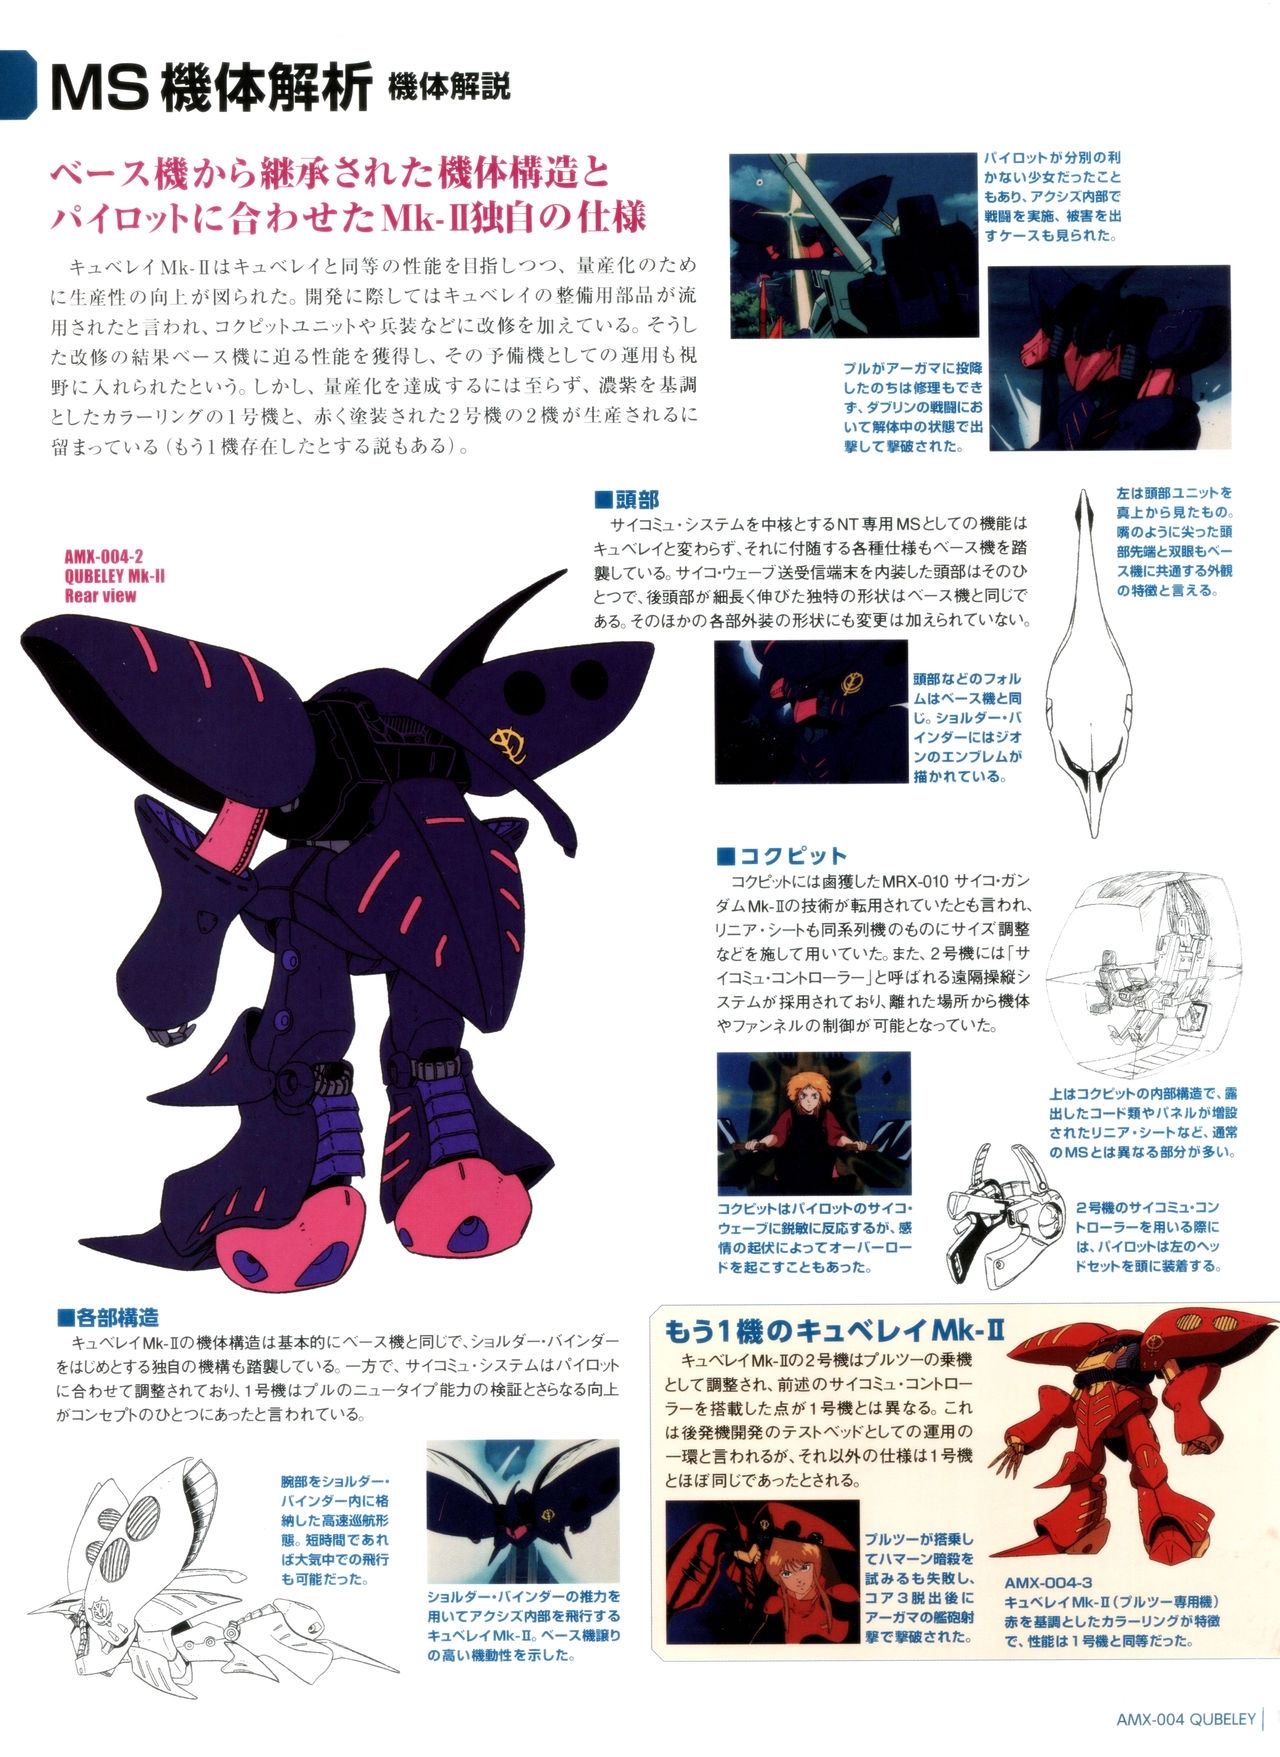 Gundam Mobile Suit Bible 17 10